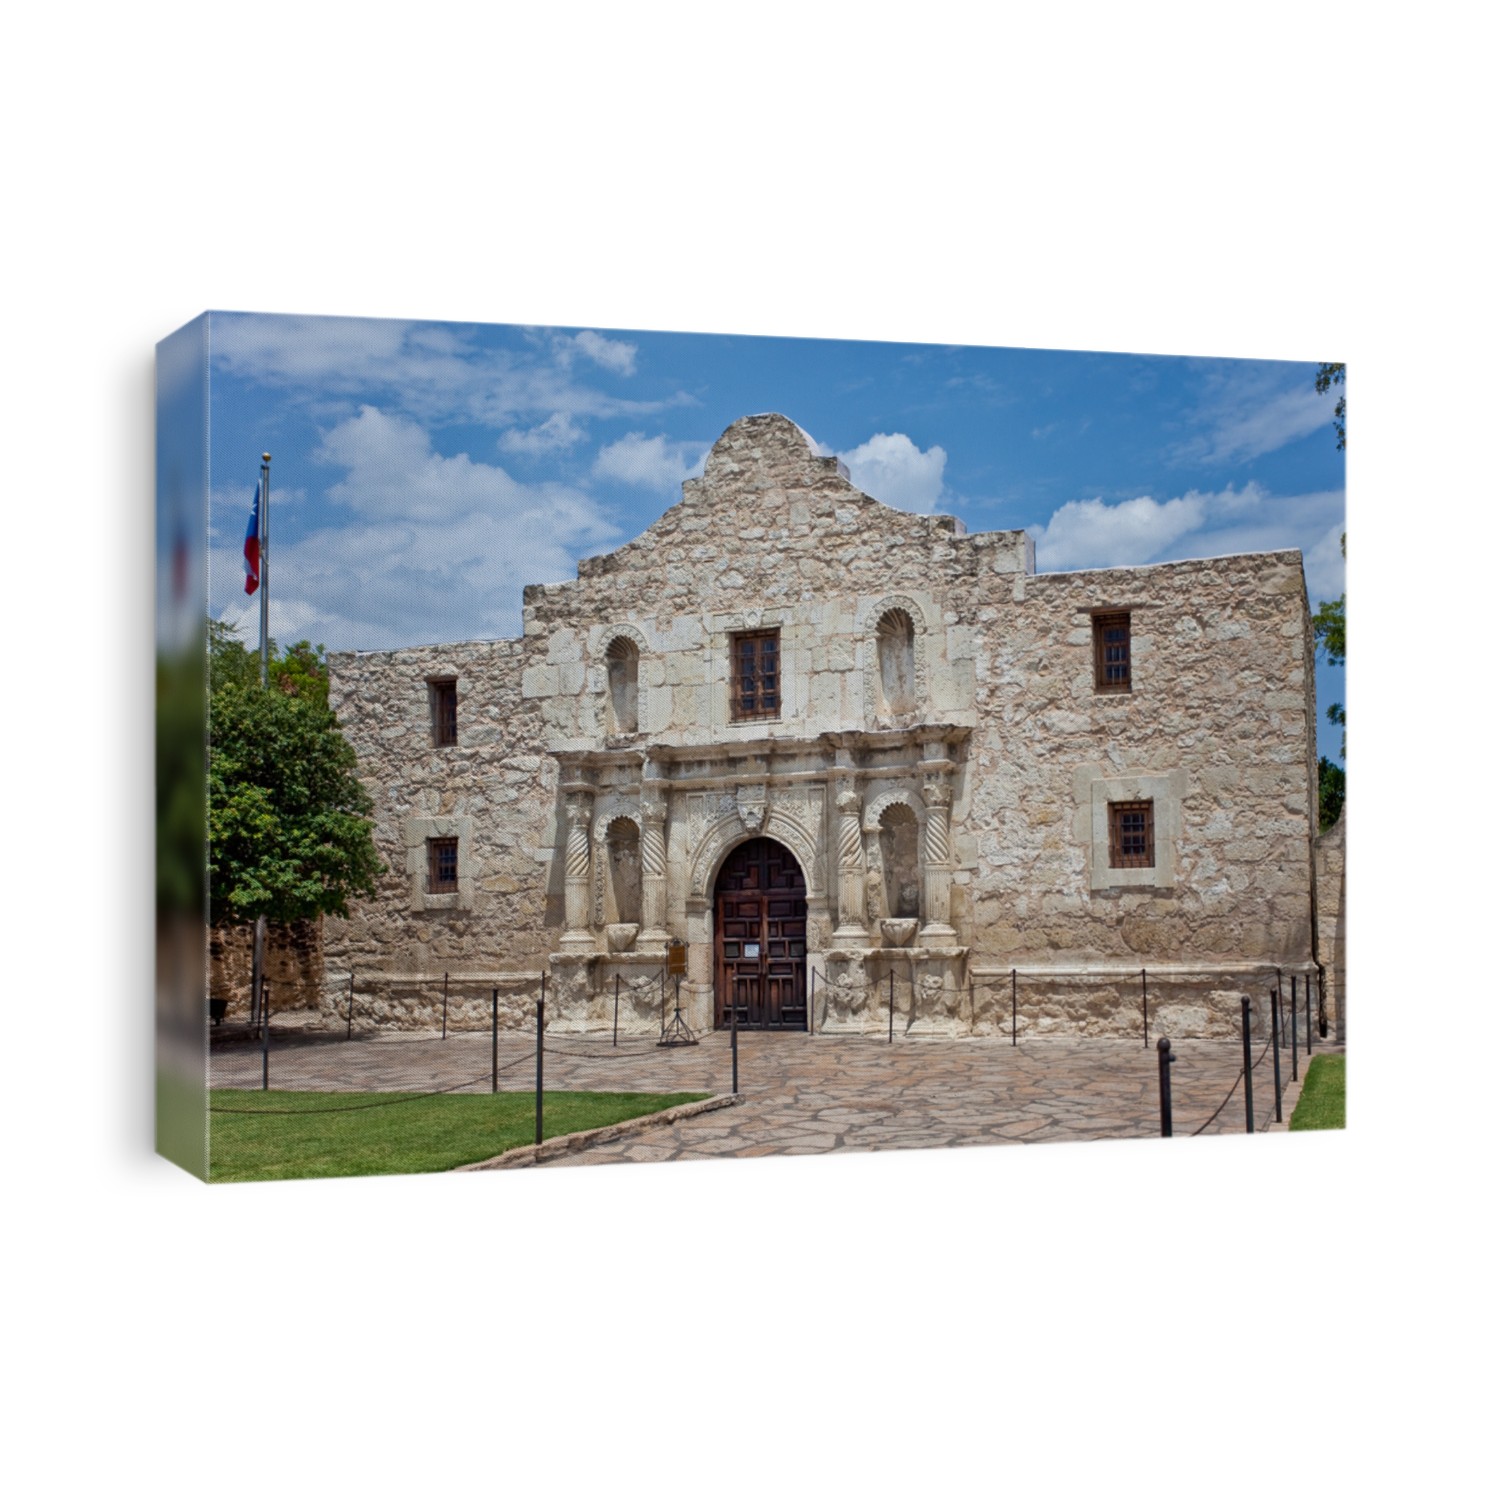 the front of the Alamo in San Antonio Texas